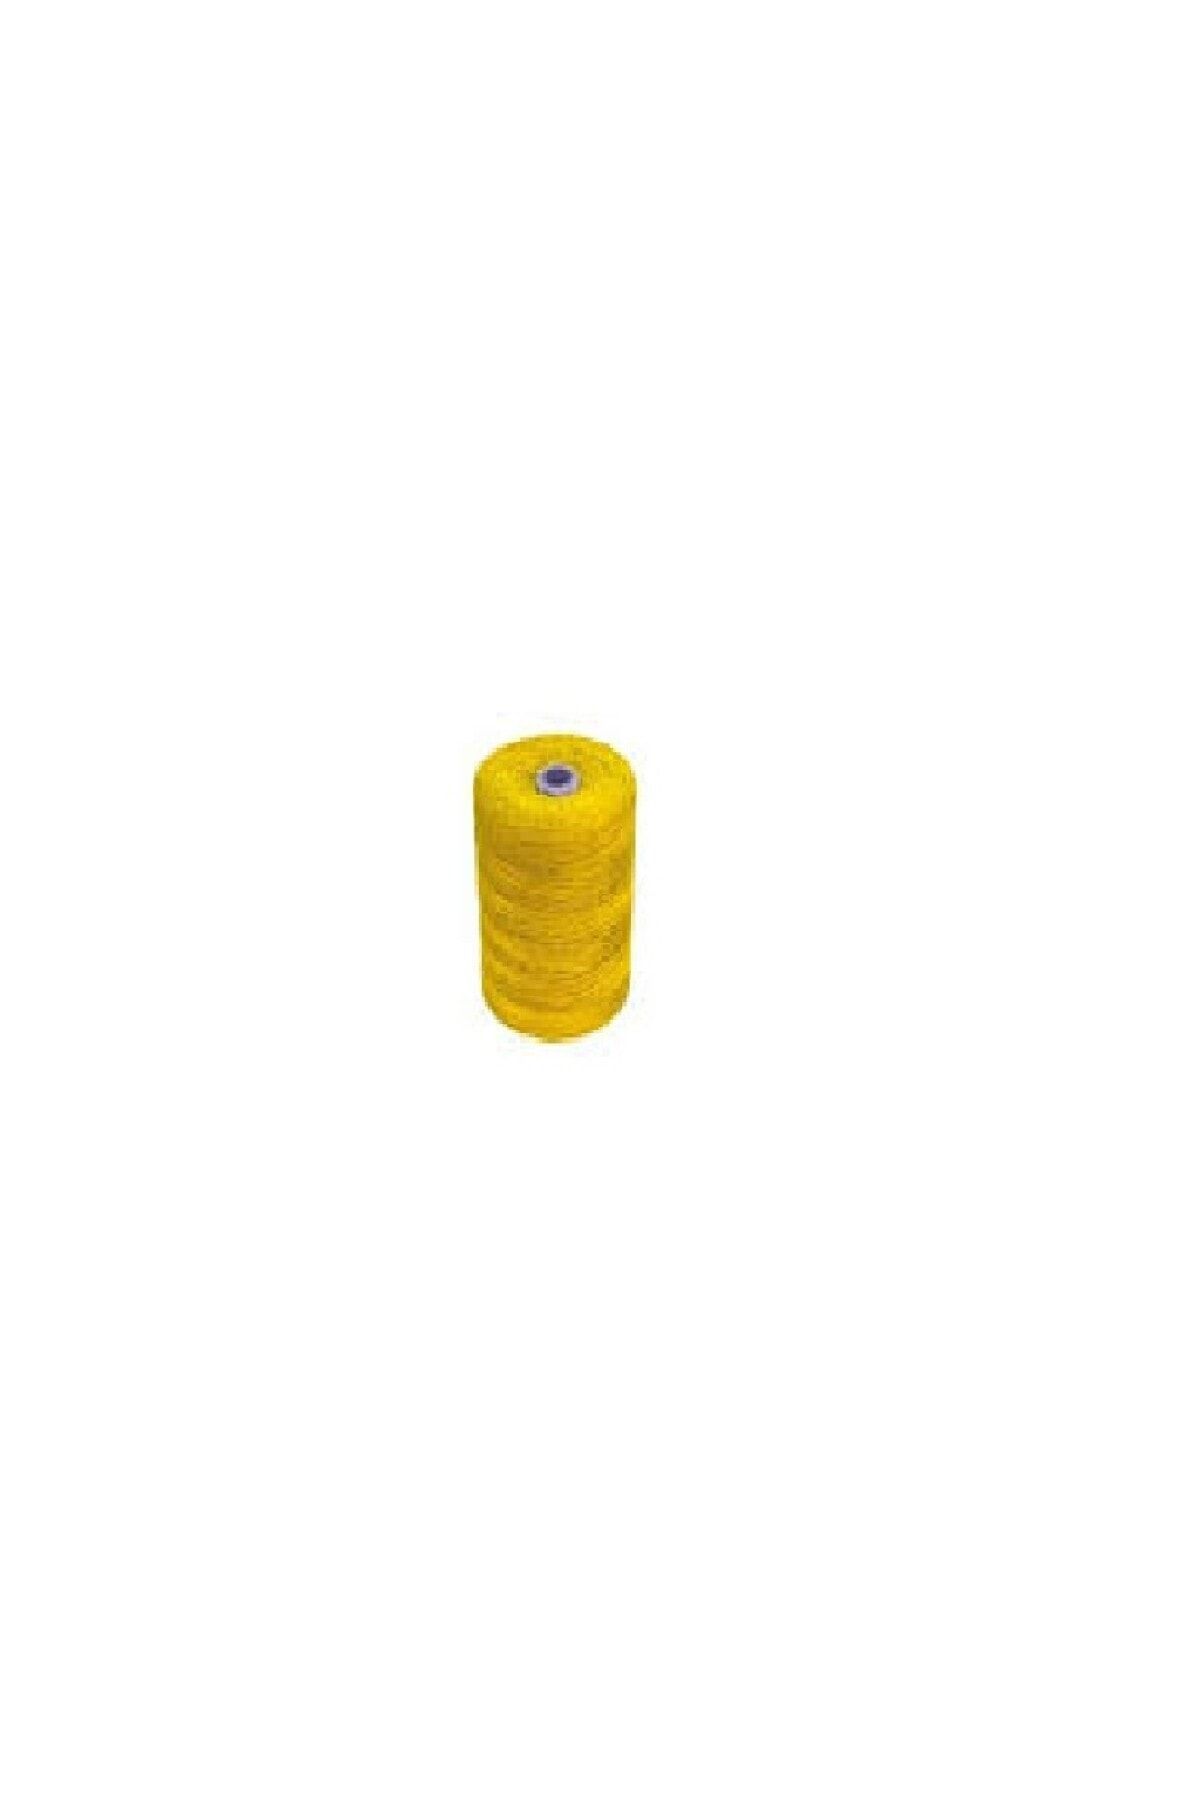 ACY STORE Plastik Paket Ipi 500 Gram - 350 Metre Naylon Uçurtma Ipi Ambalaj Ve Süs Ipi Sarı